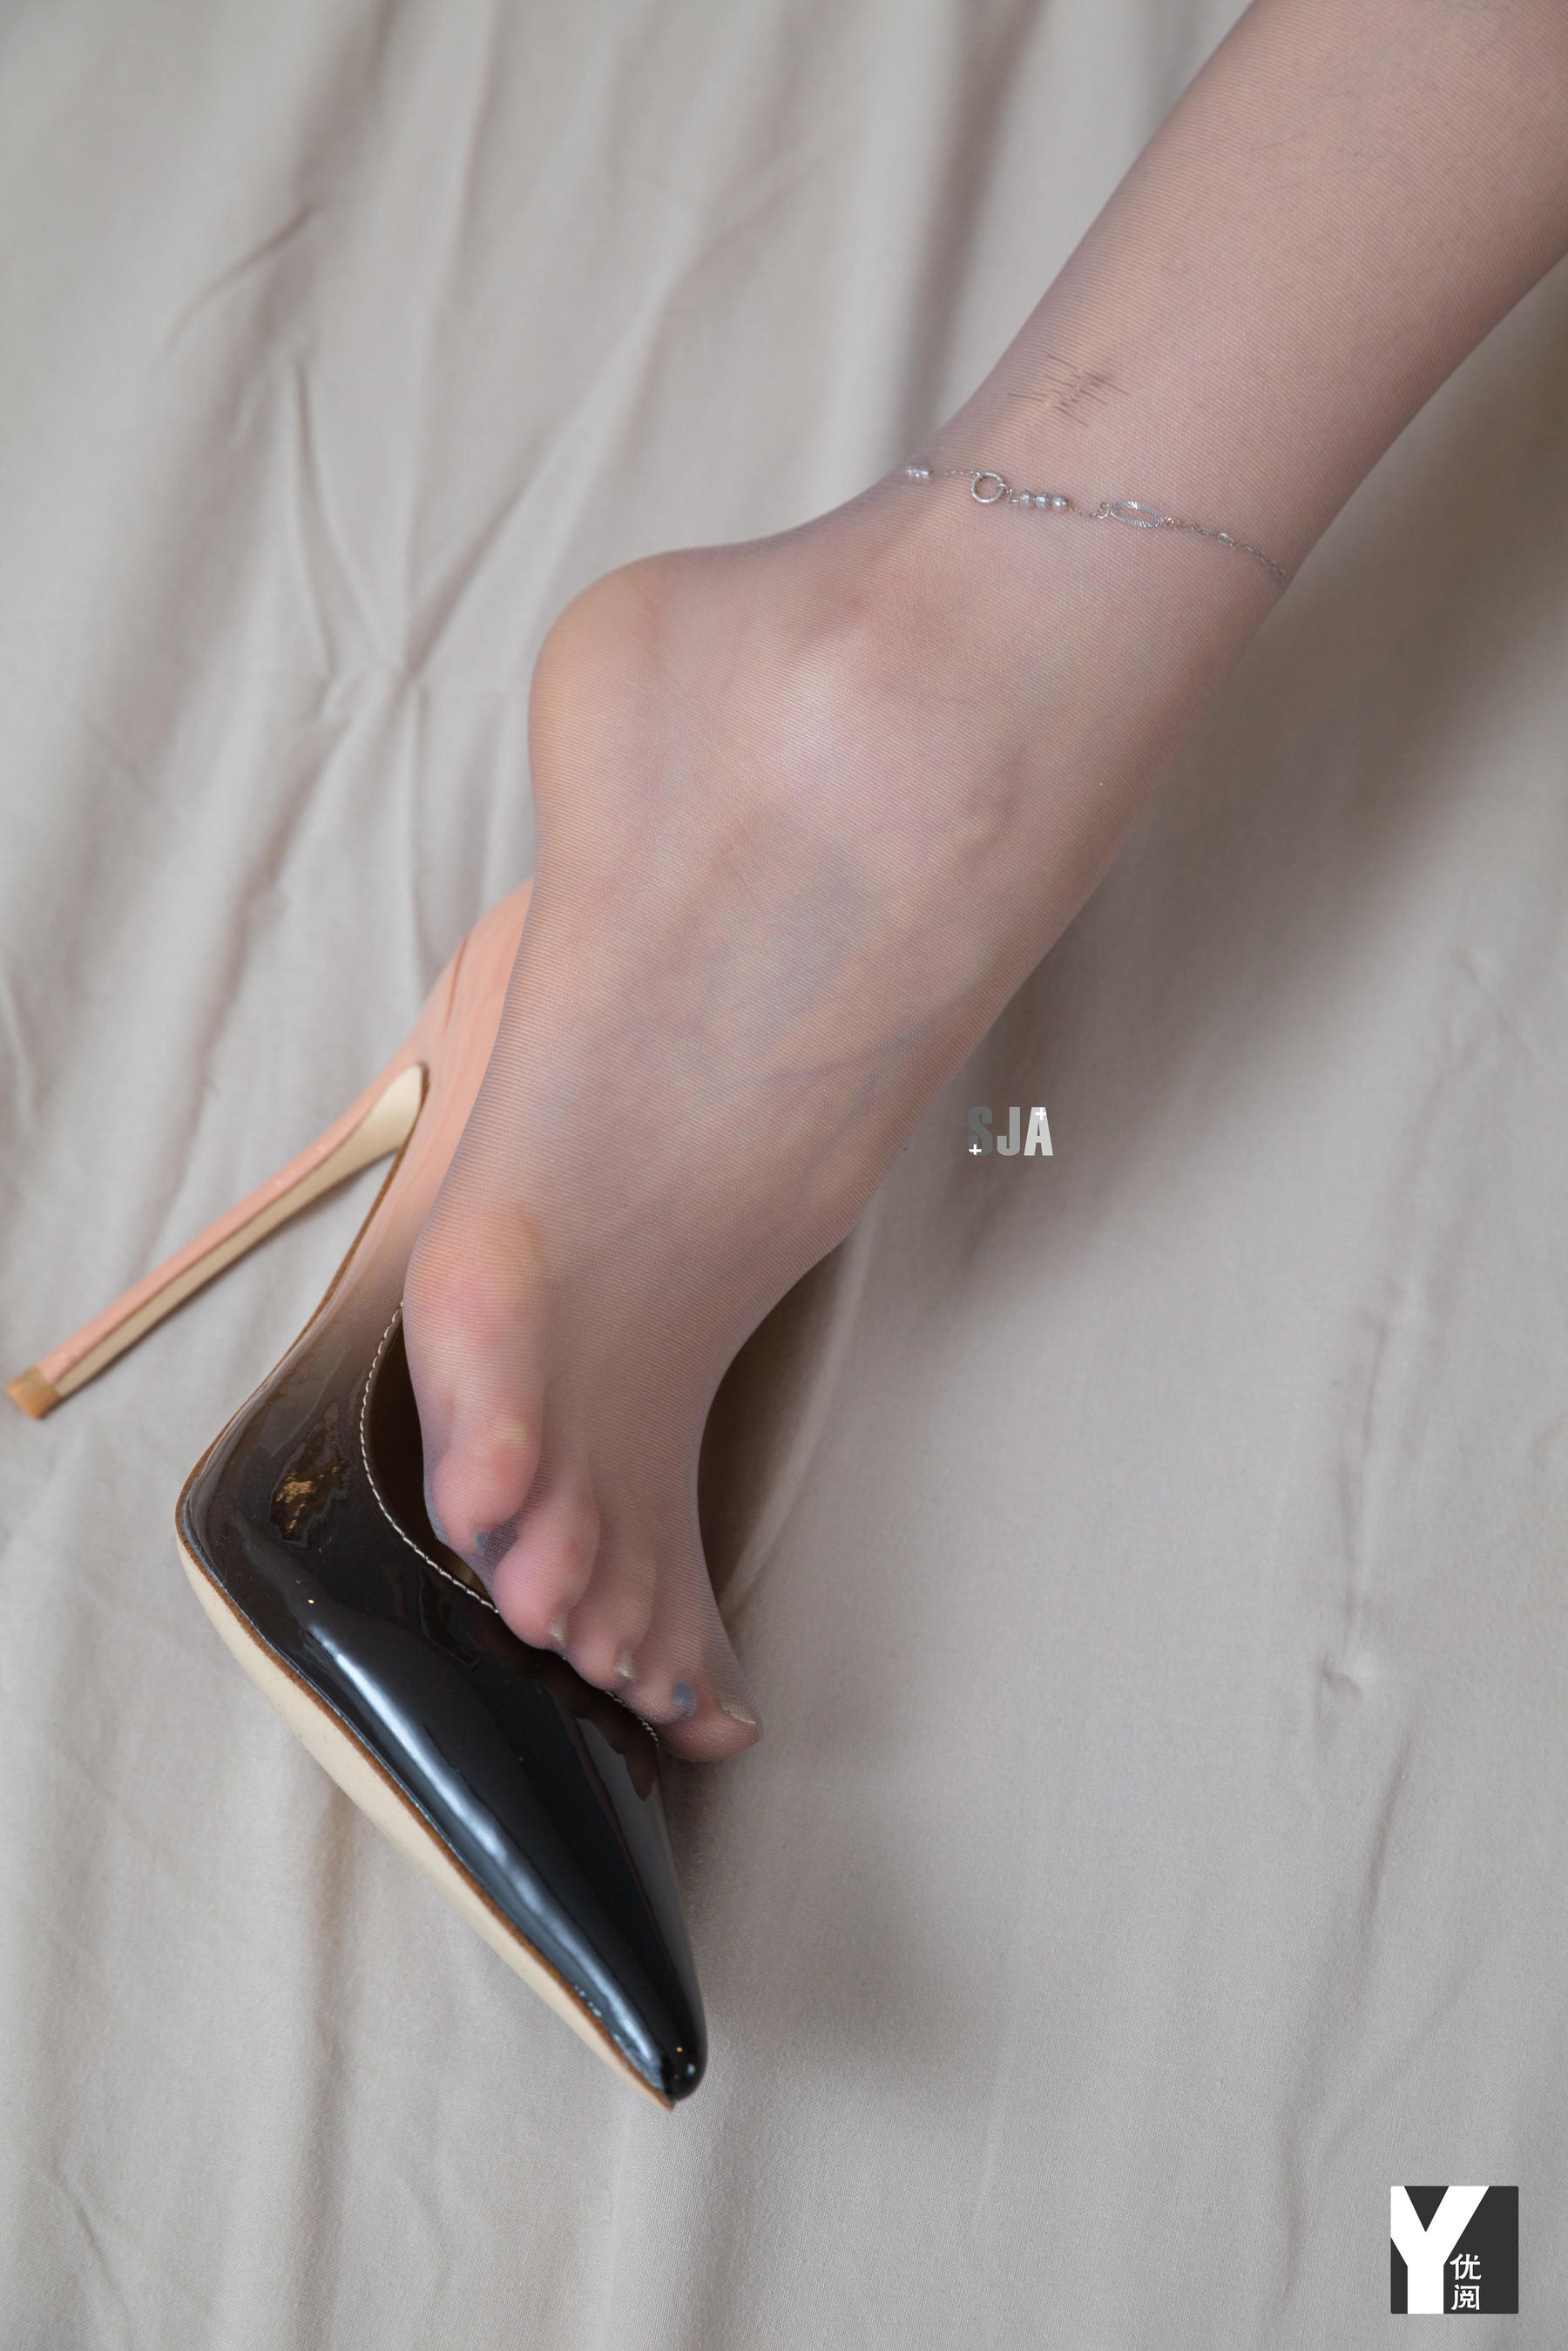 [爷 sja] New magazine sja016 “醺” beautiful leg photo